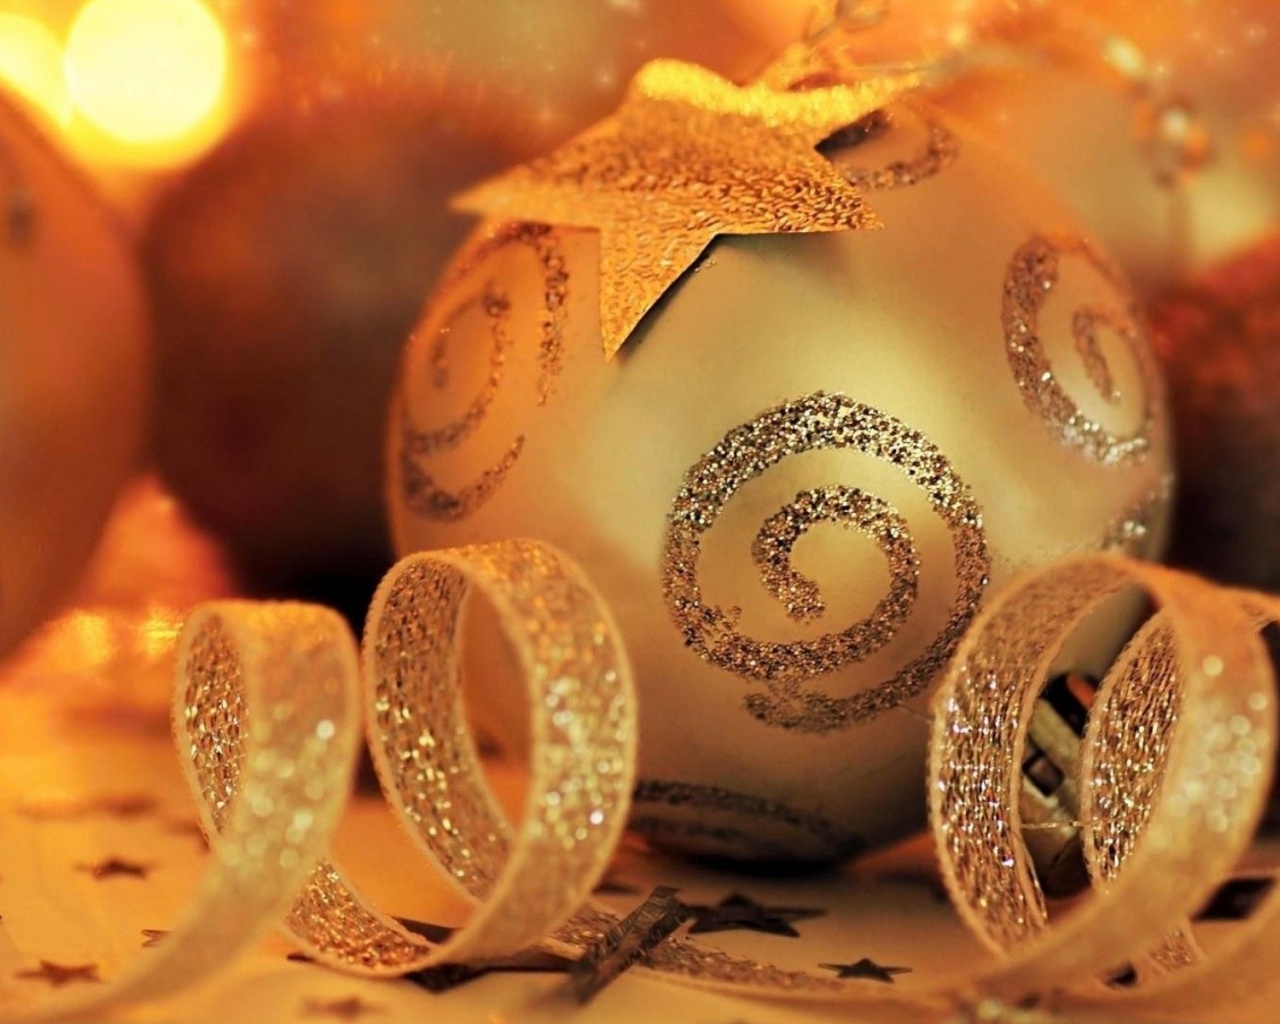 Festive New Year Toys Bowls Ornaments Gold Belt Star